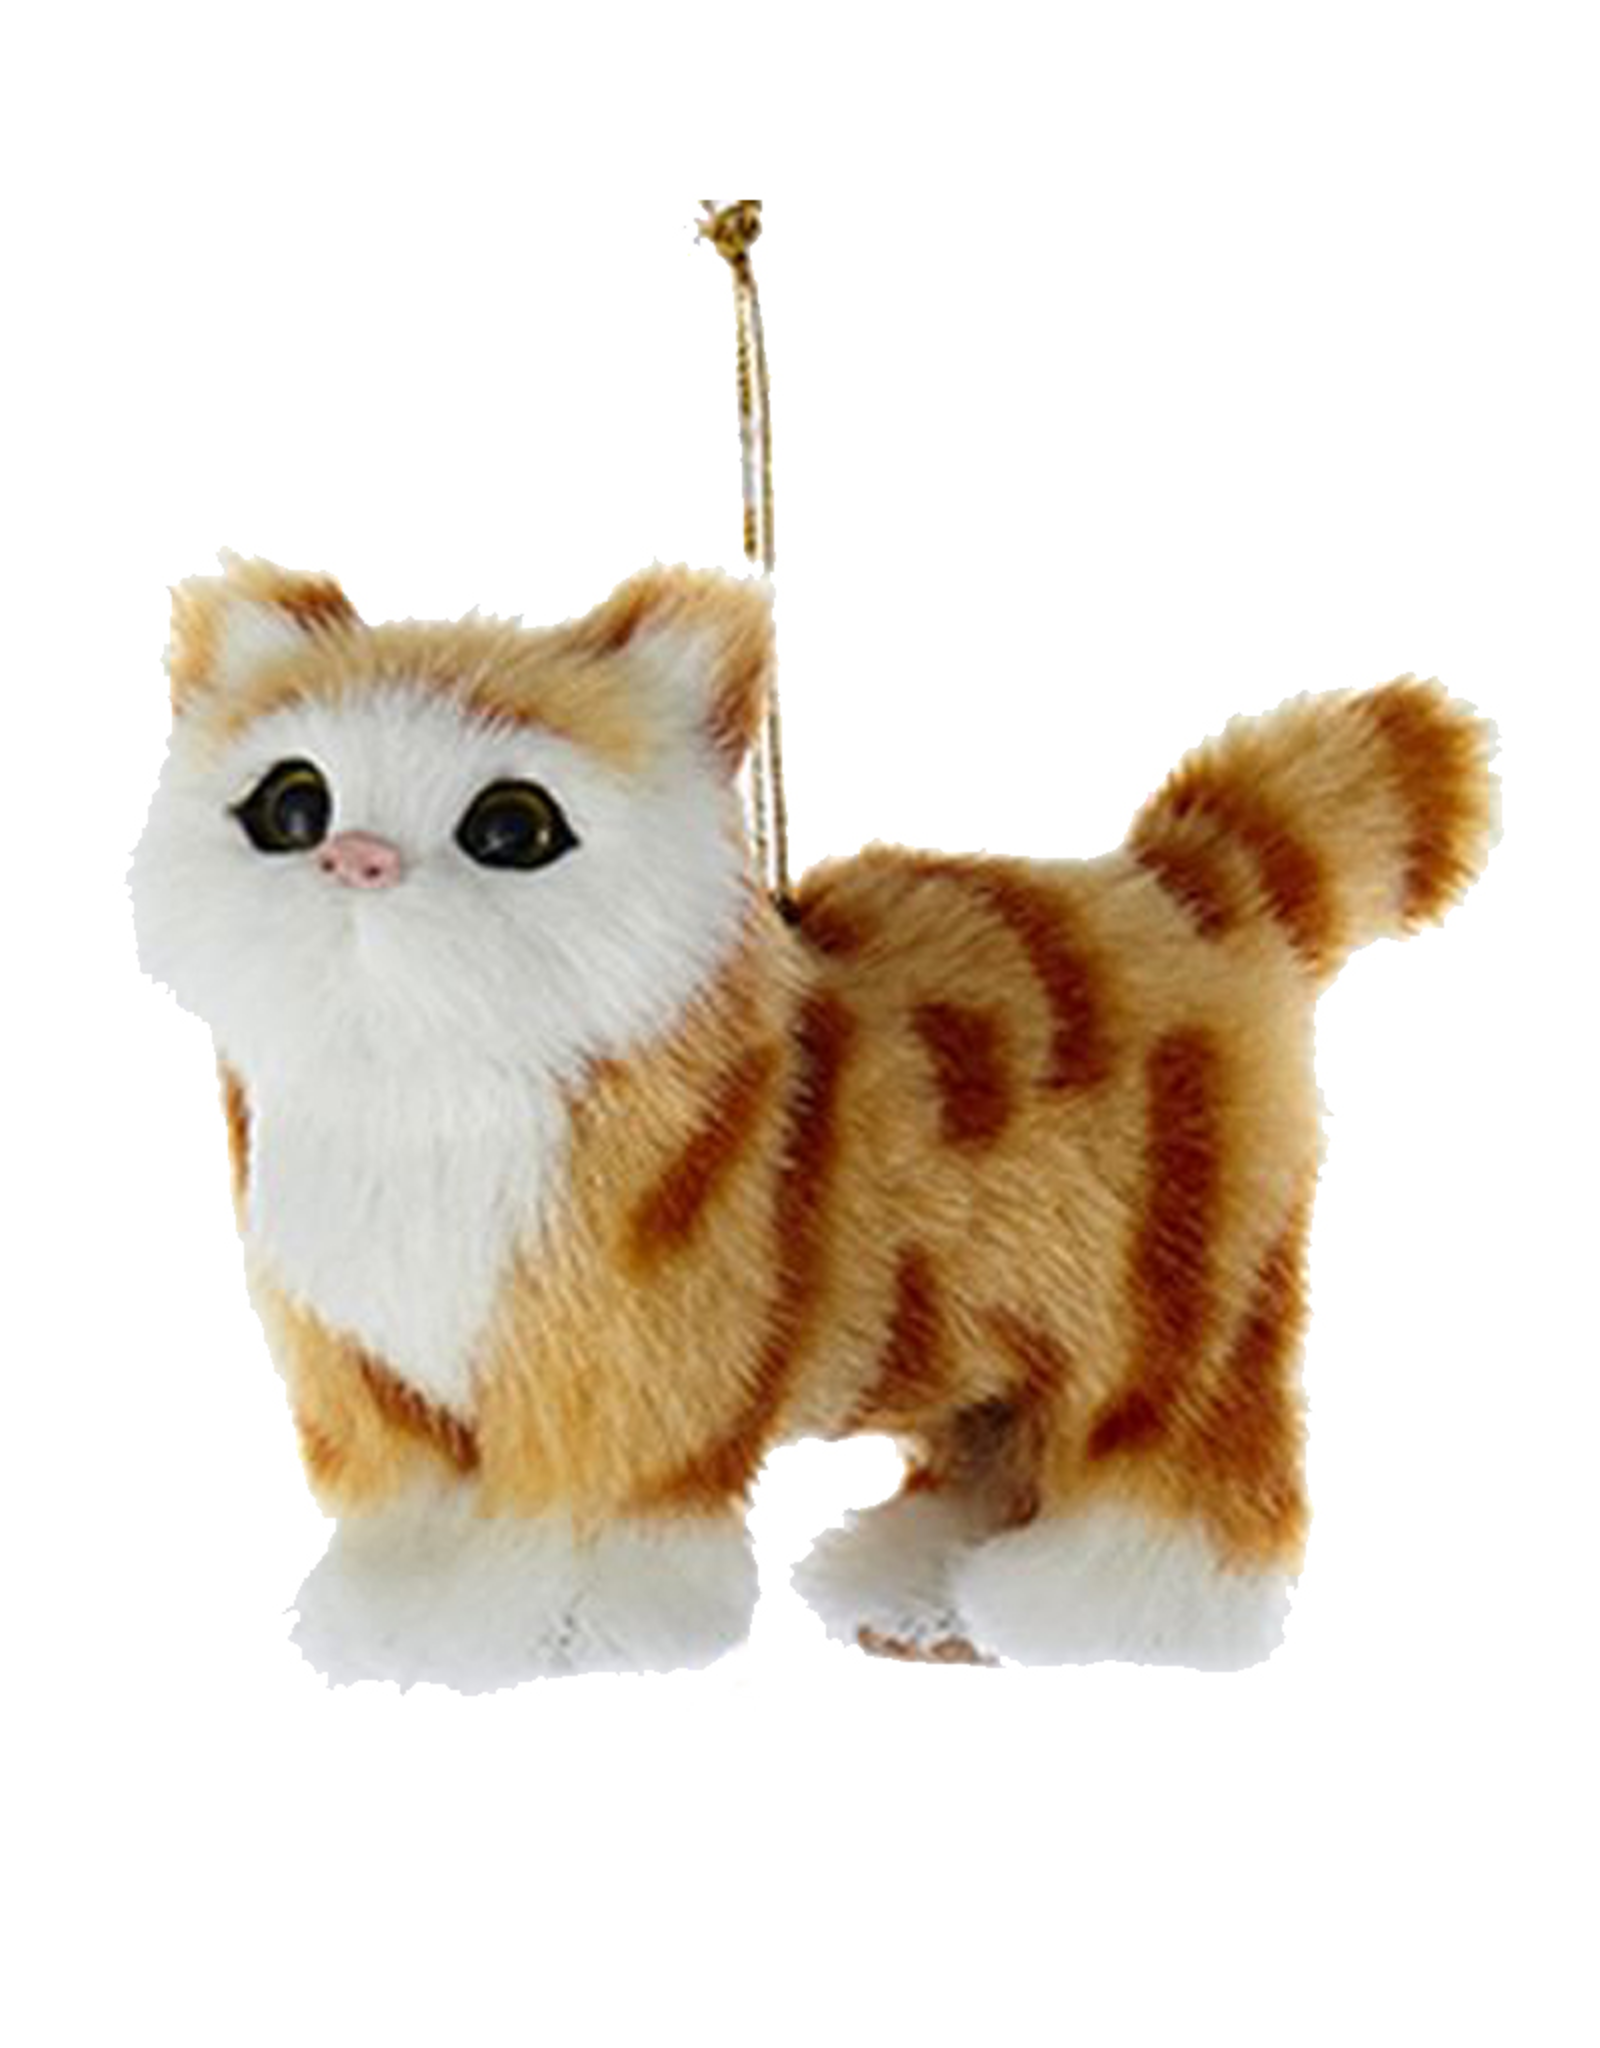 Kurt Adler Christmas Cat Ornaments Orange Brown Tabby Cat 4 Inch